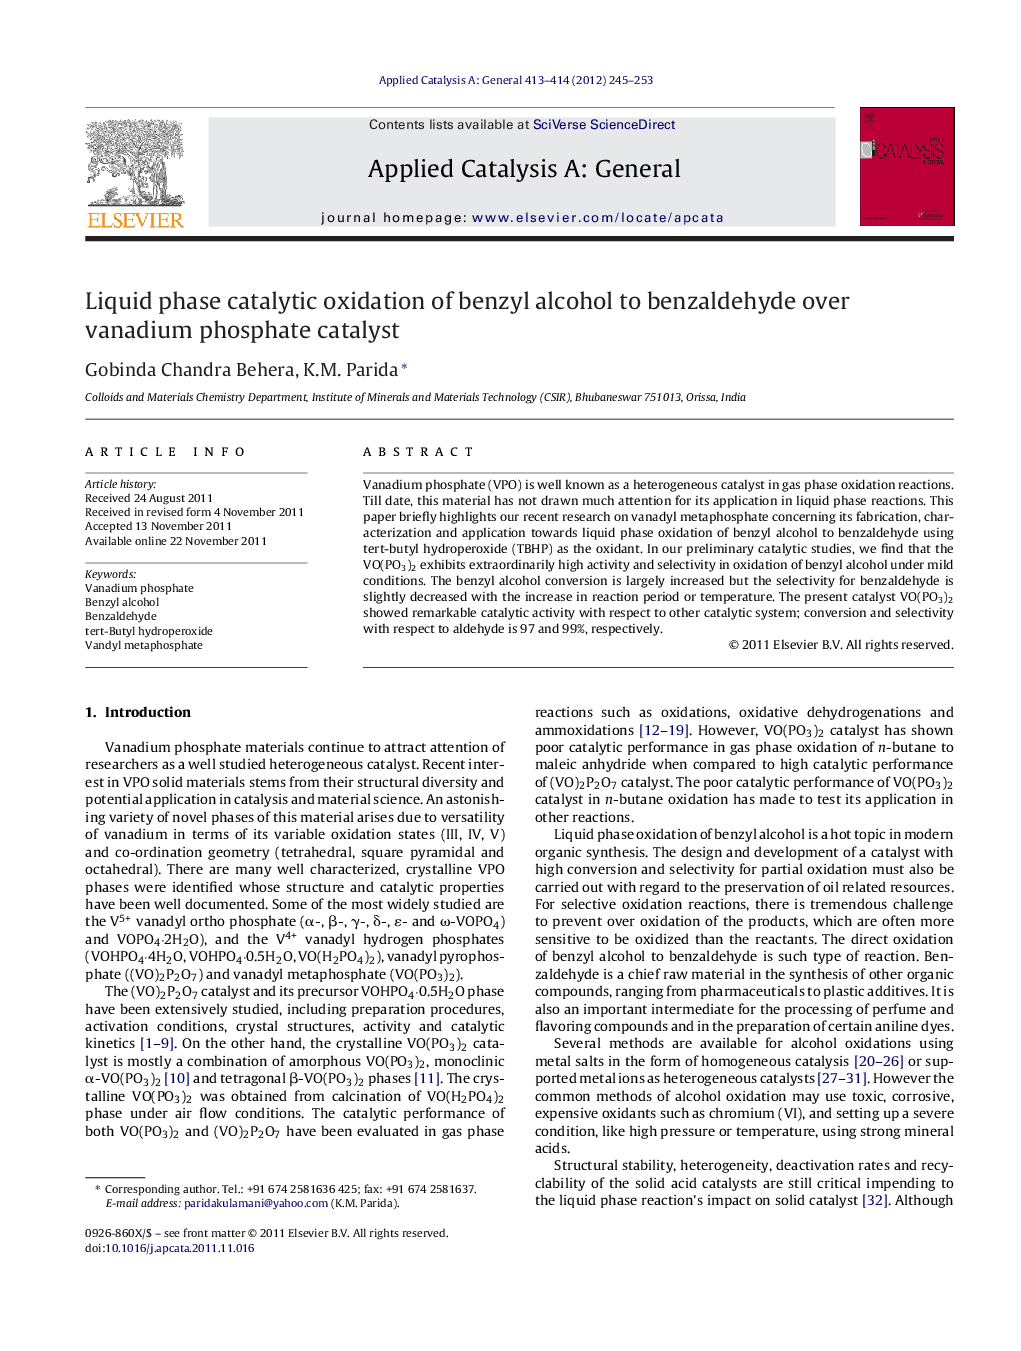 Liquid phase catalytic oxidation of benzyl alcohol to benzaldehyde over vanadium phosphate catalyst